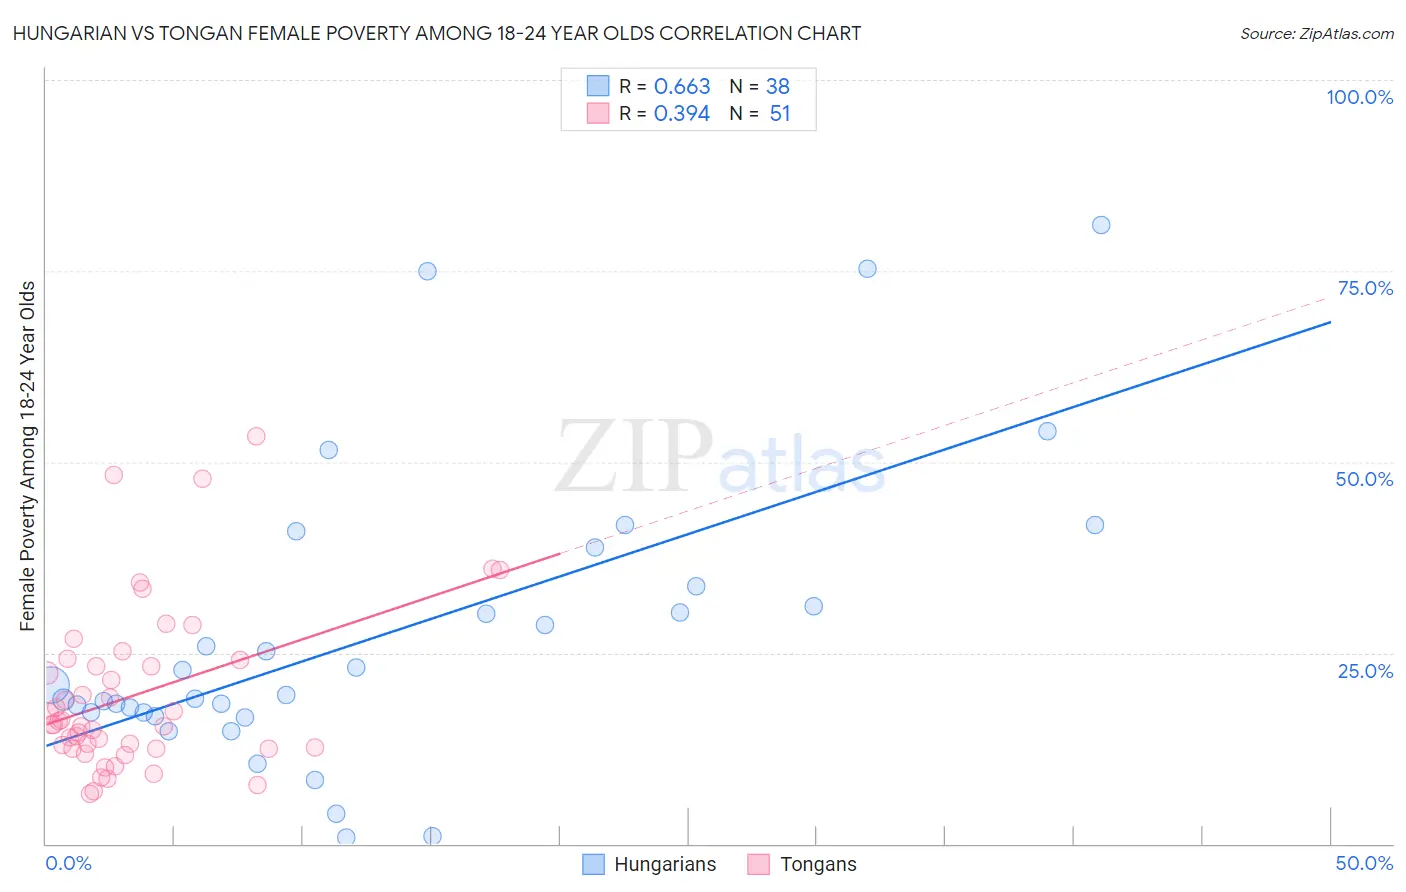 Hungarian vs Tongan Female Poverty Among 18-24 Year Olds